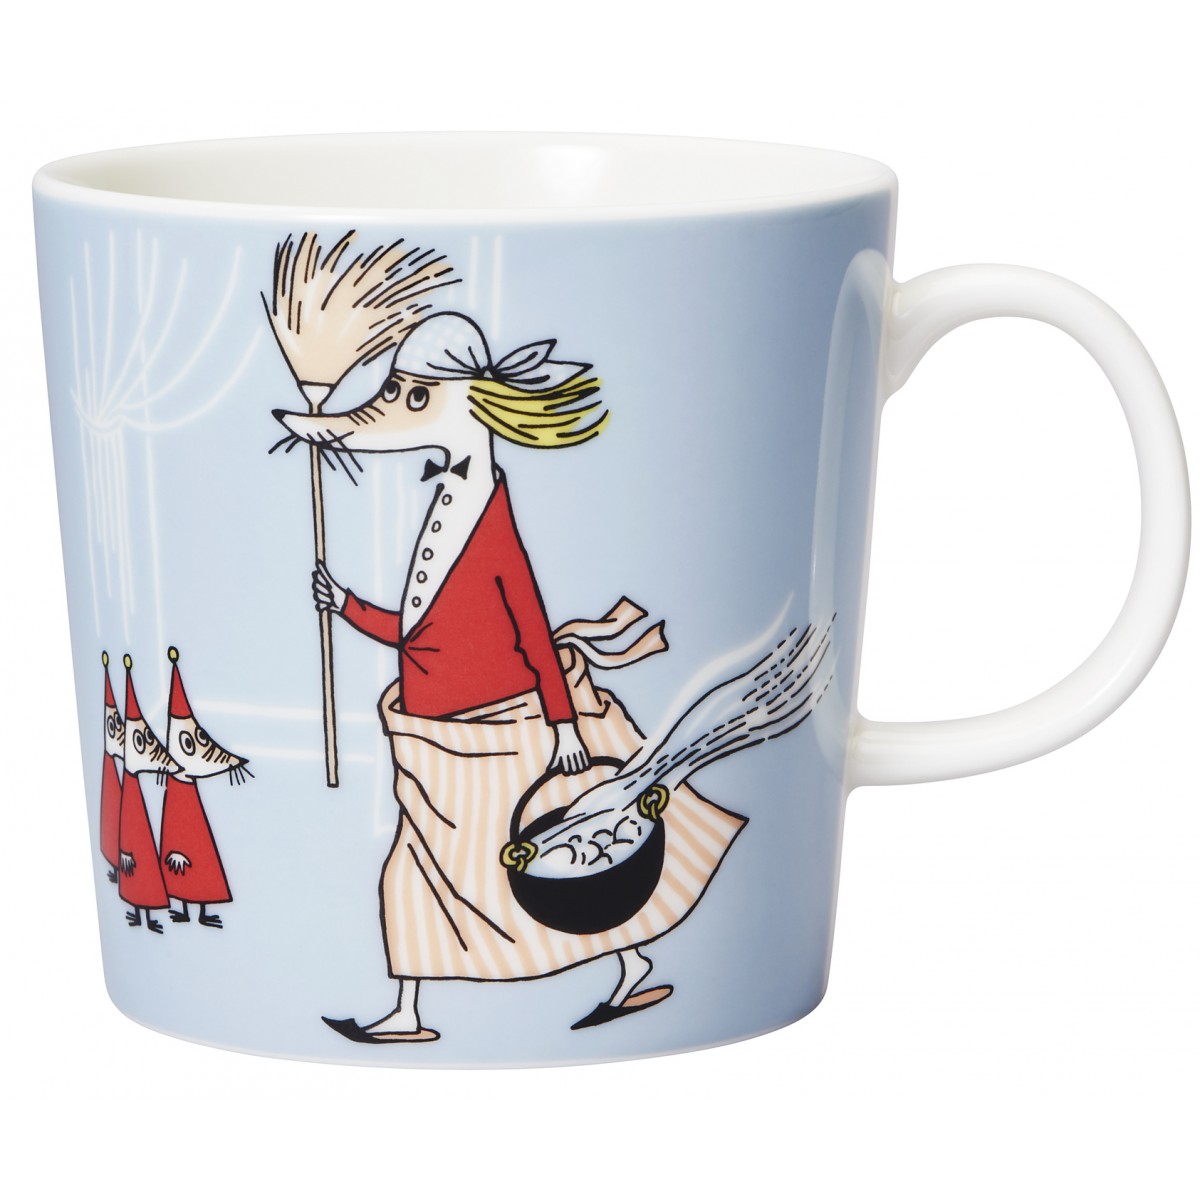 Fillyfjonk grey – Moomin mug